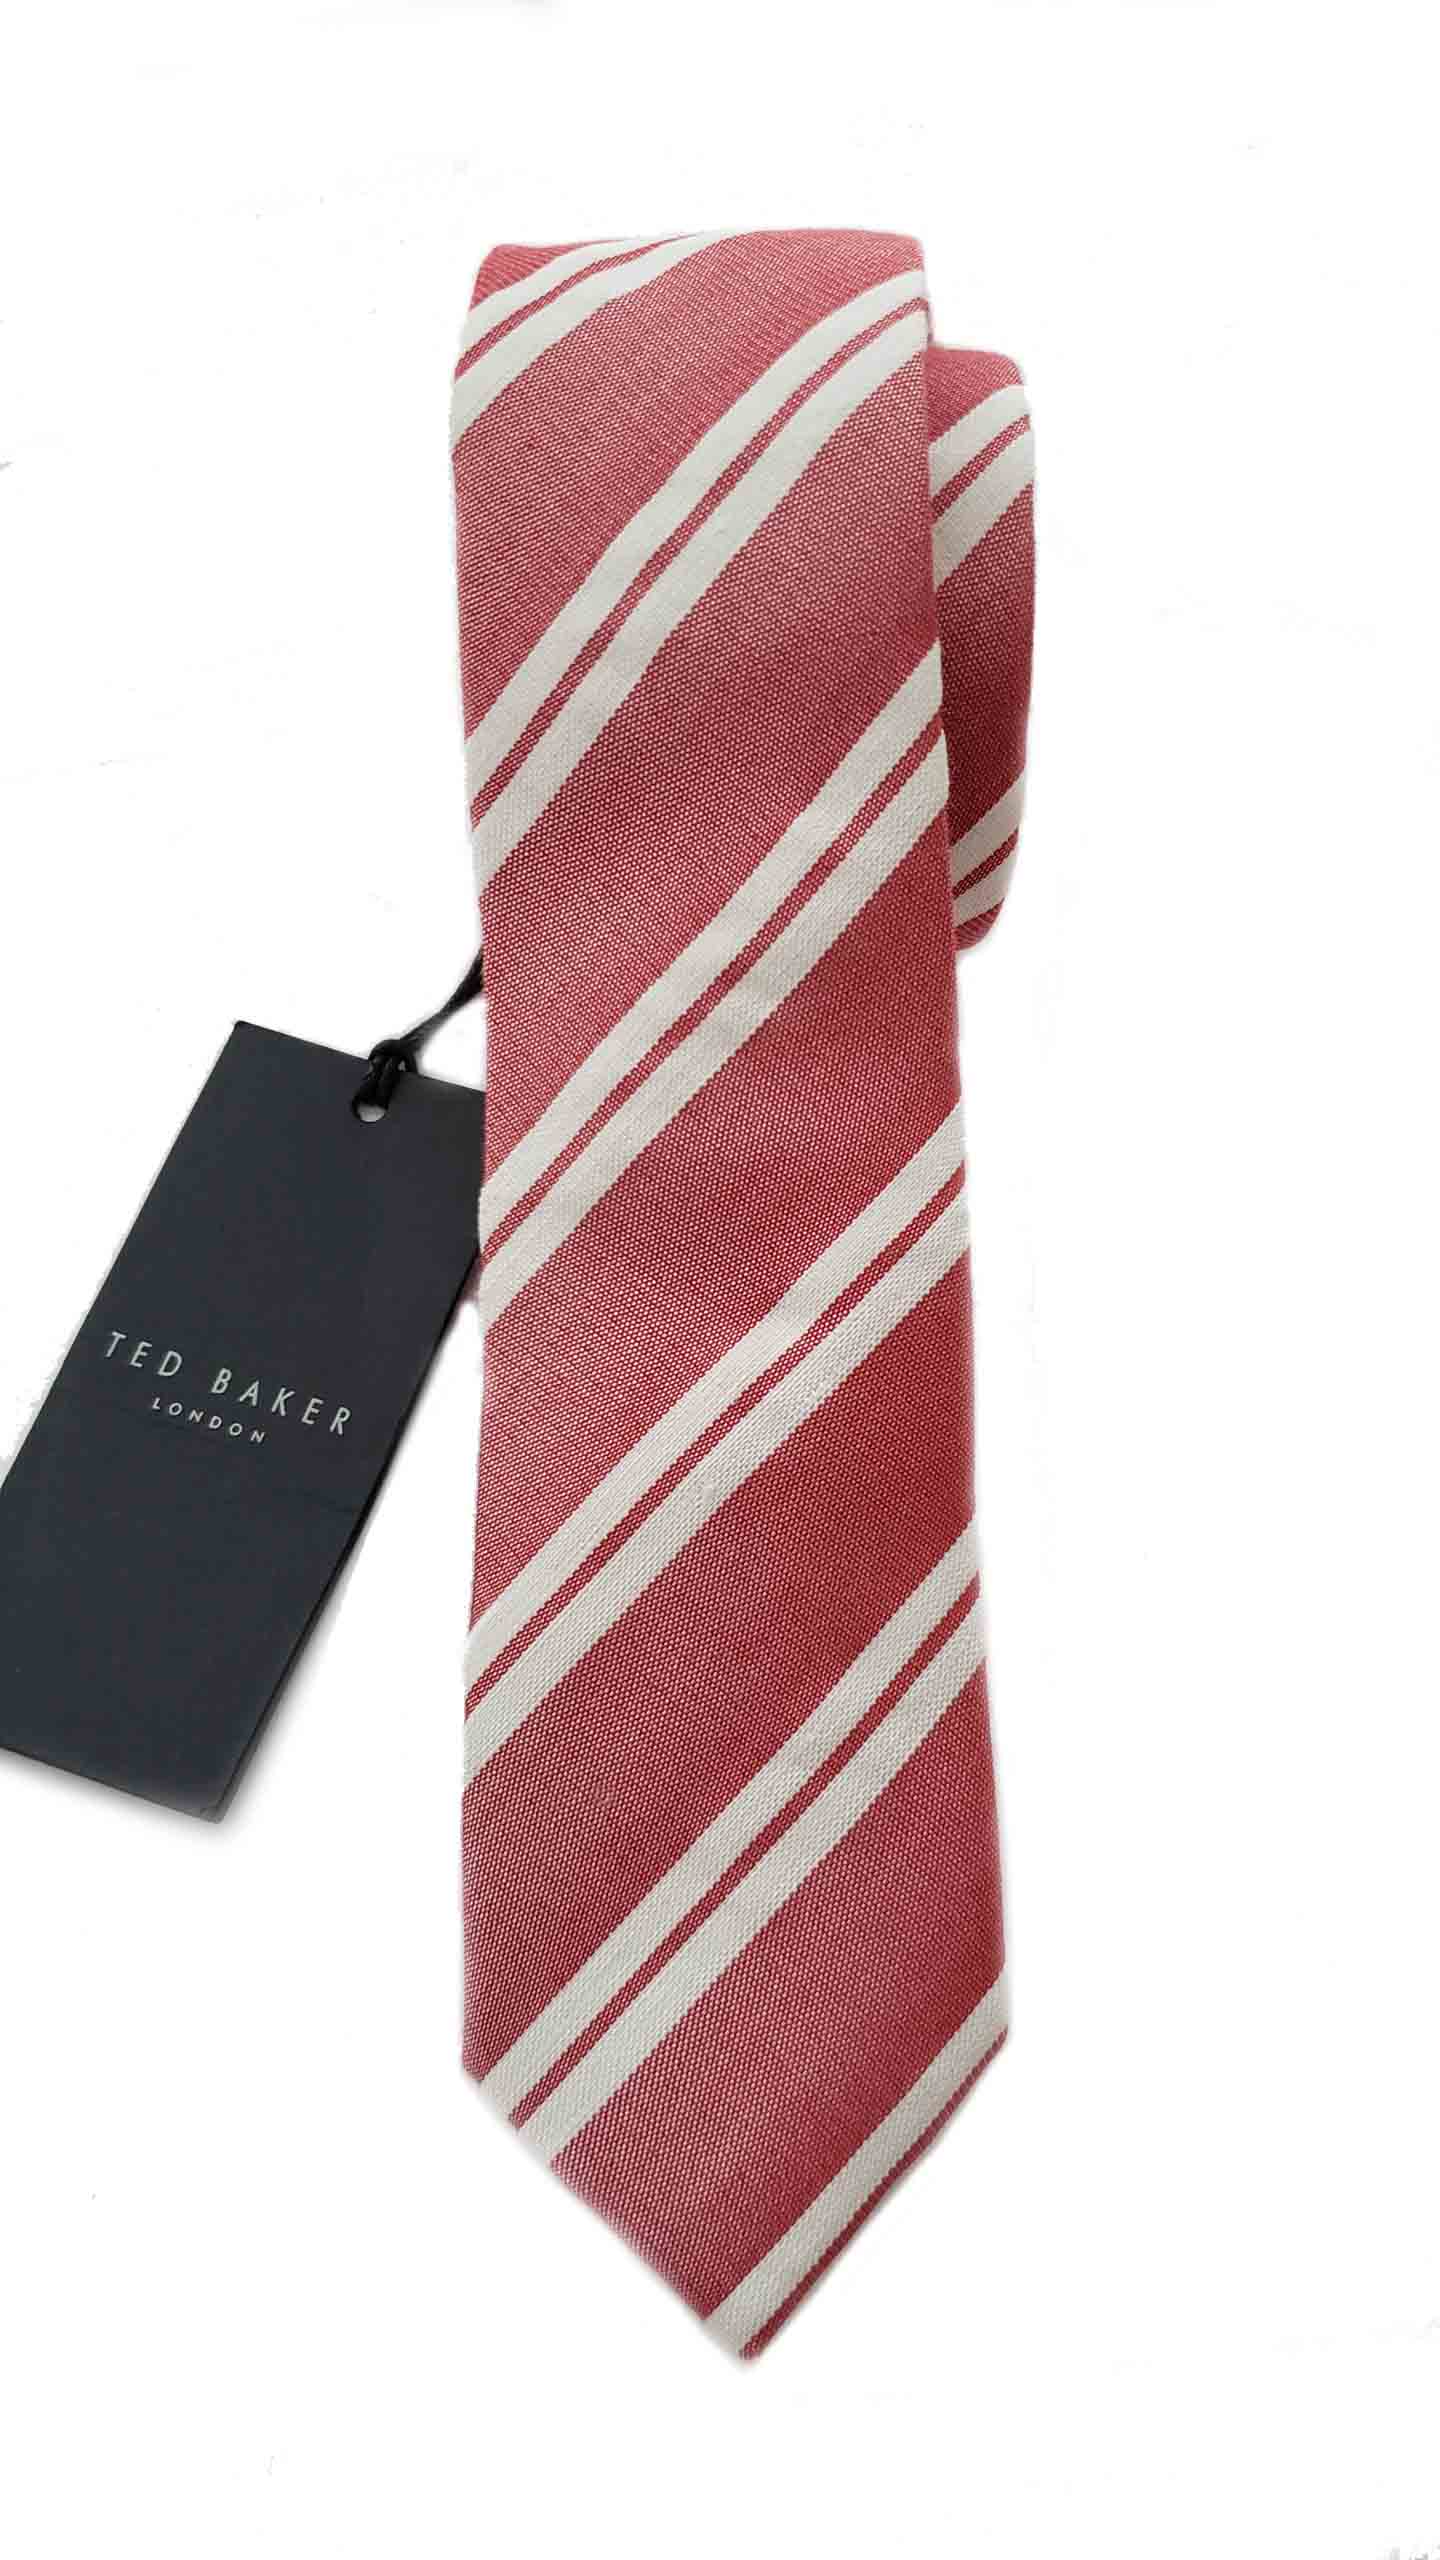 Ted Baker London Silk Linen Cotton Tie Red White Striped Narrow Men's